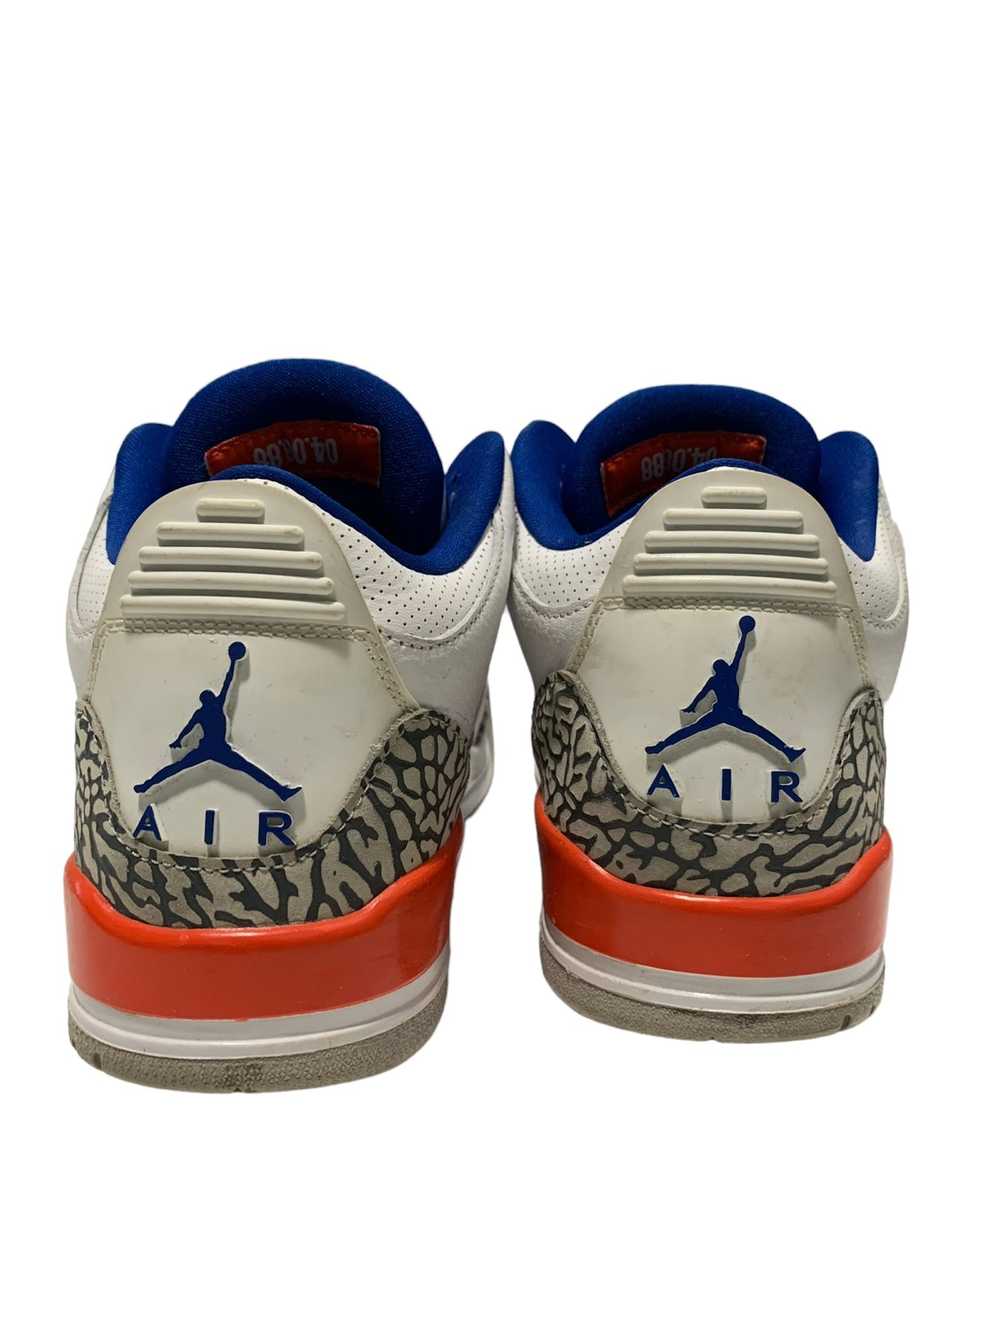 Jordan Brand Air Jordan 3 Retro 'Knicks' - image 4